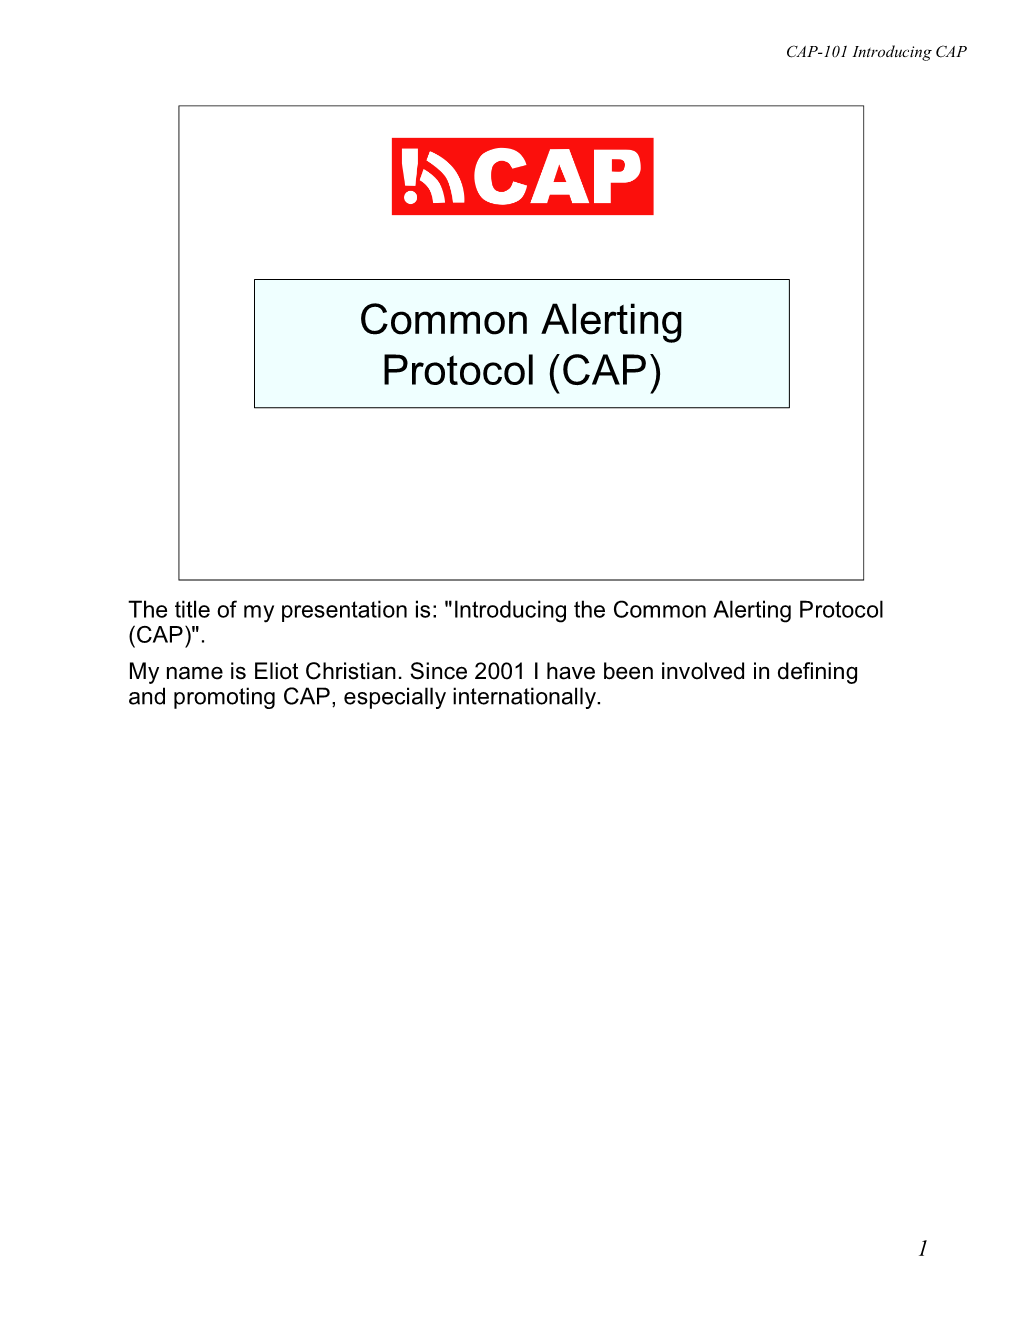 Common Alerting Protocol (CAP)